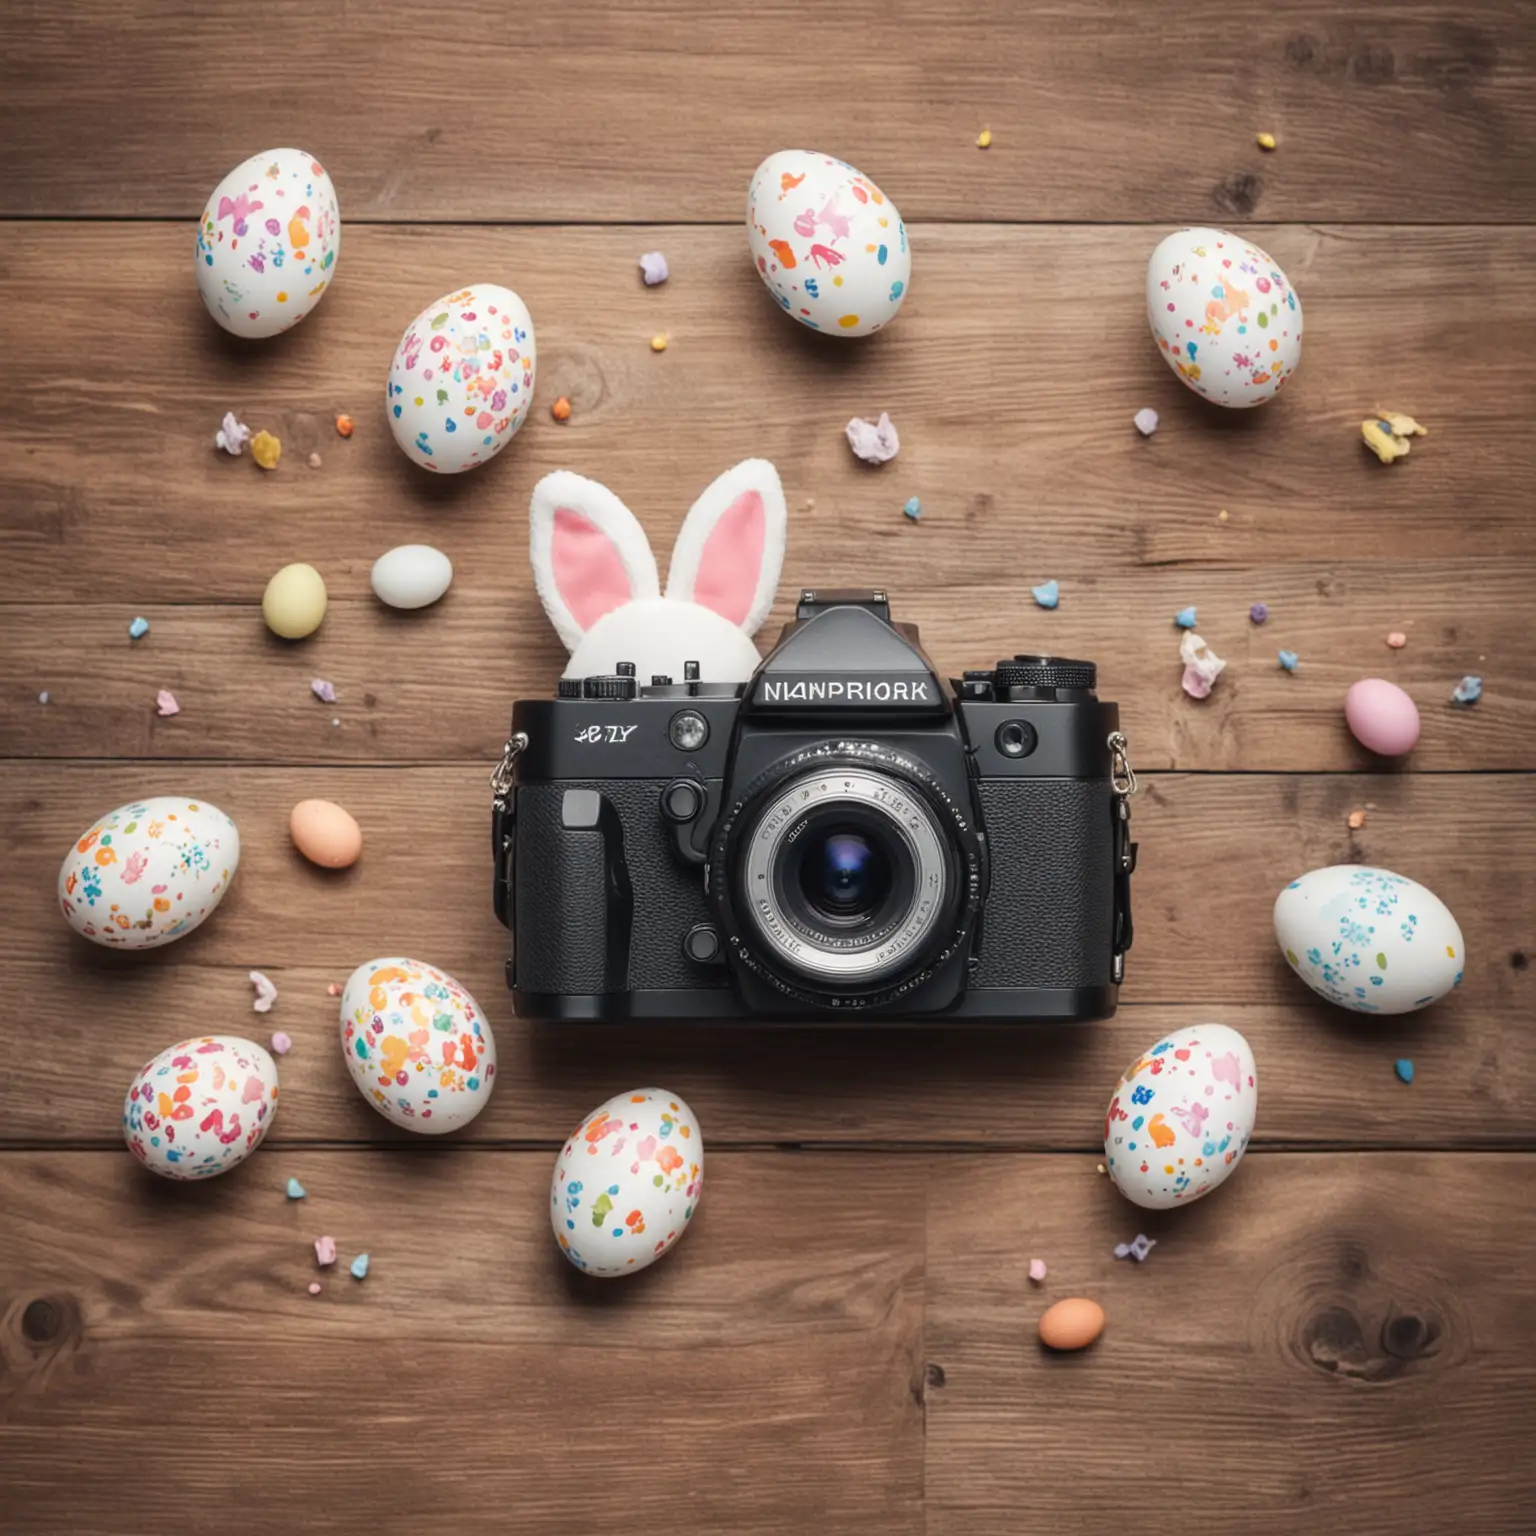 Joyful Easter Celebration with a Camera